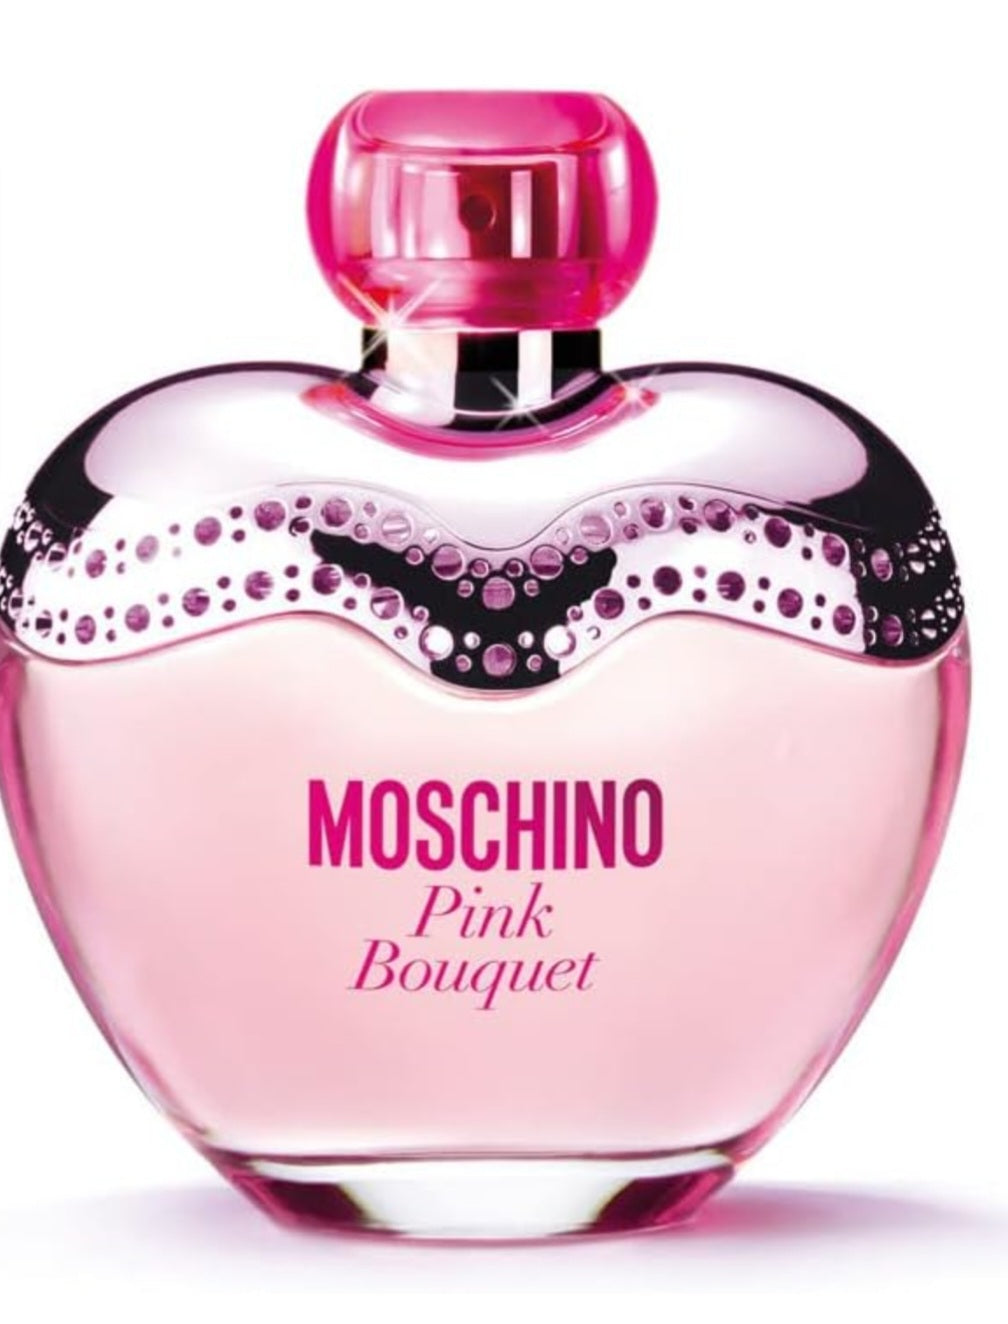 Moschino Pink Bouquet Eau de Toilette for Women 100 ml